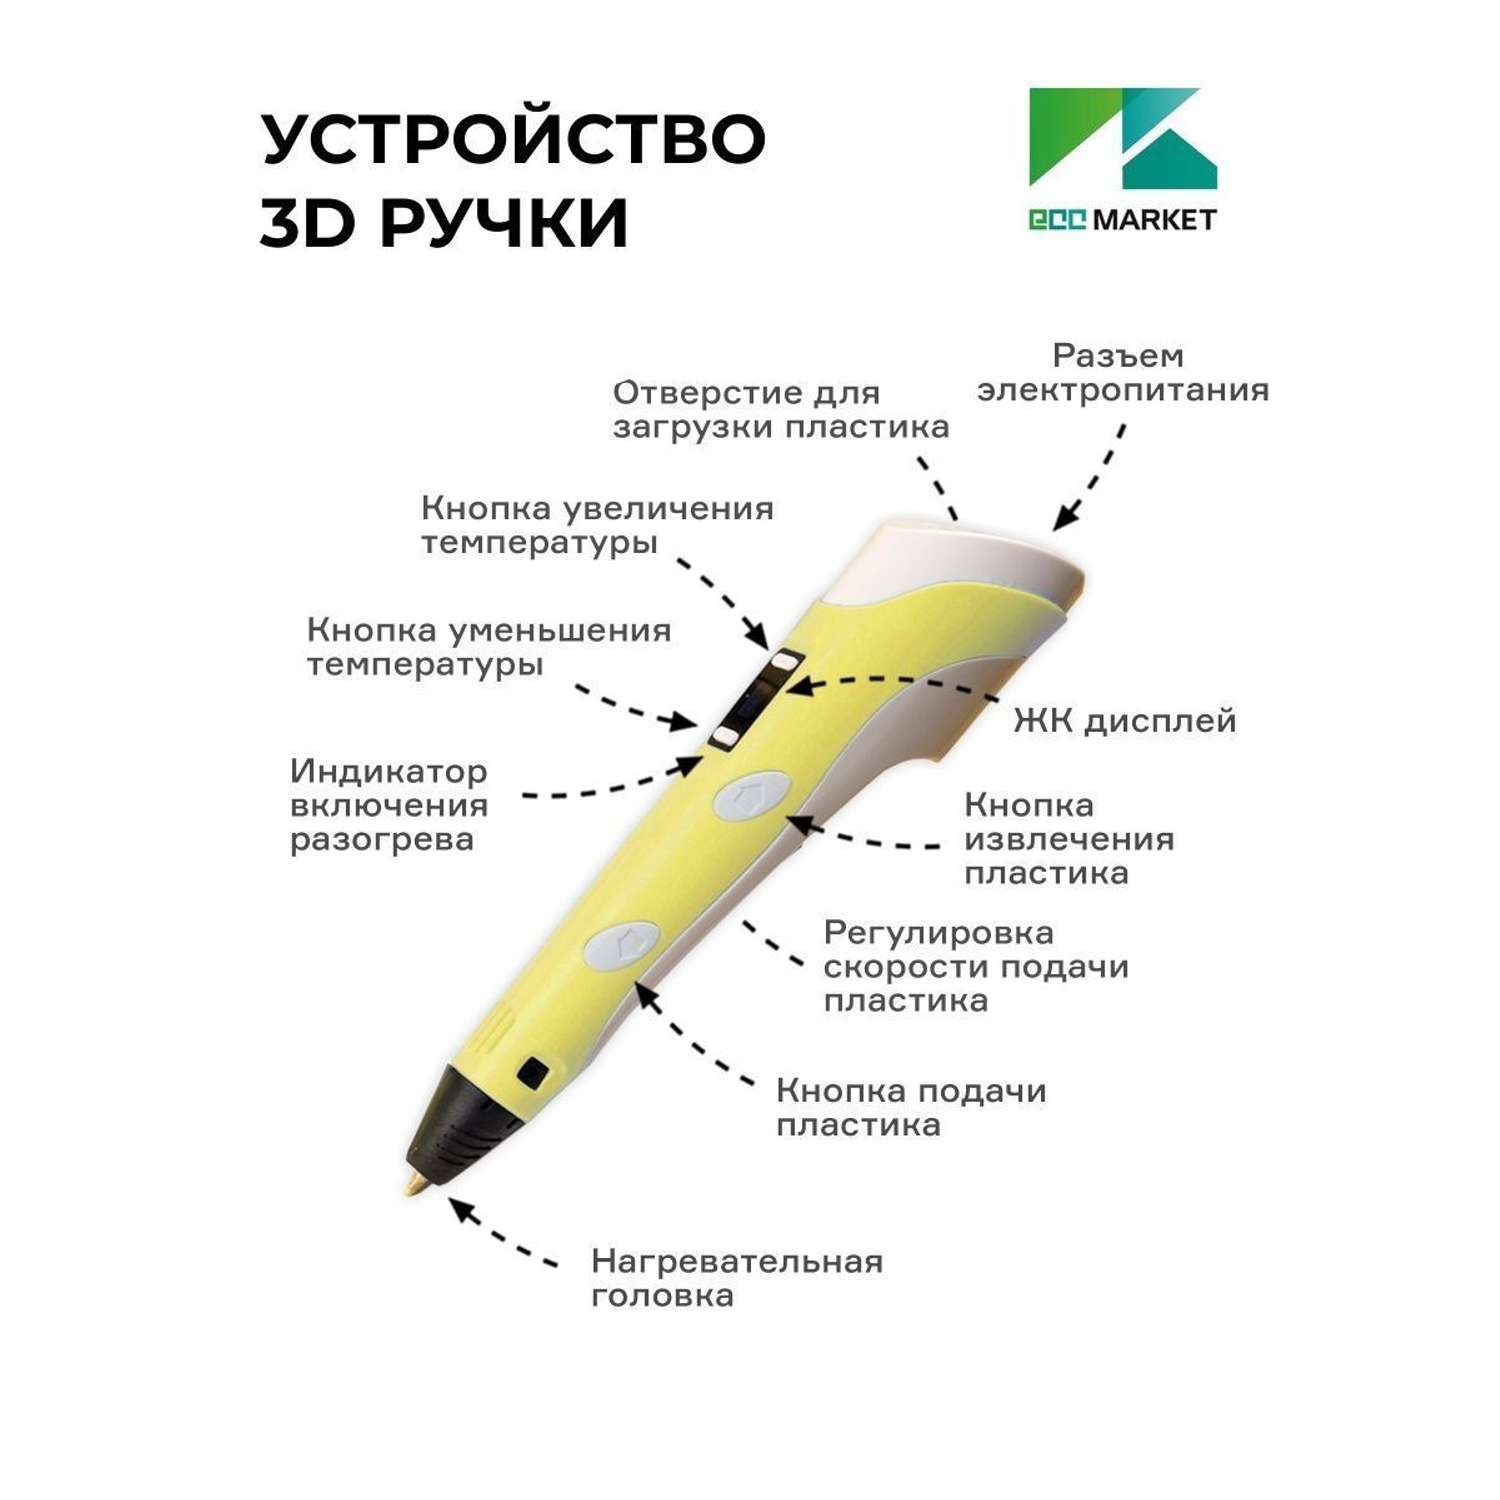 3D ручка ECC Market 3DPEN 3 7 желтая - фото 5